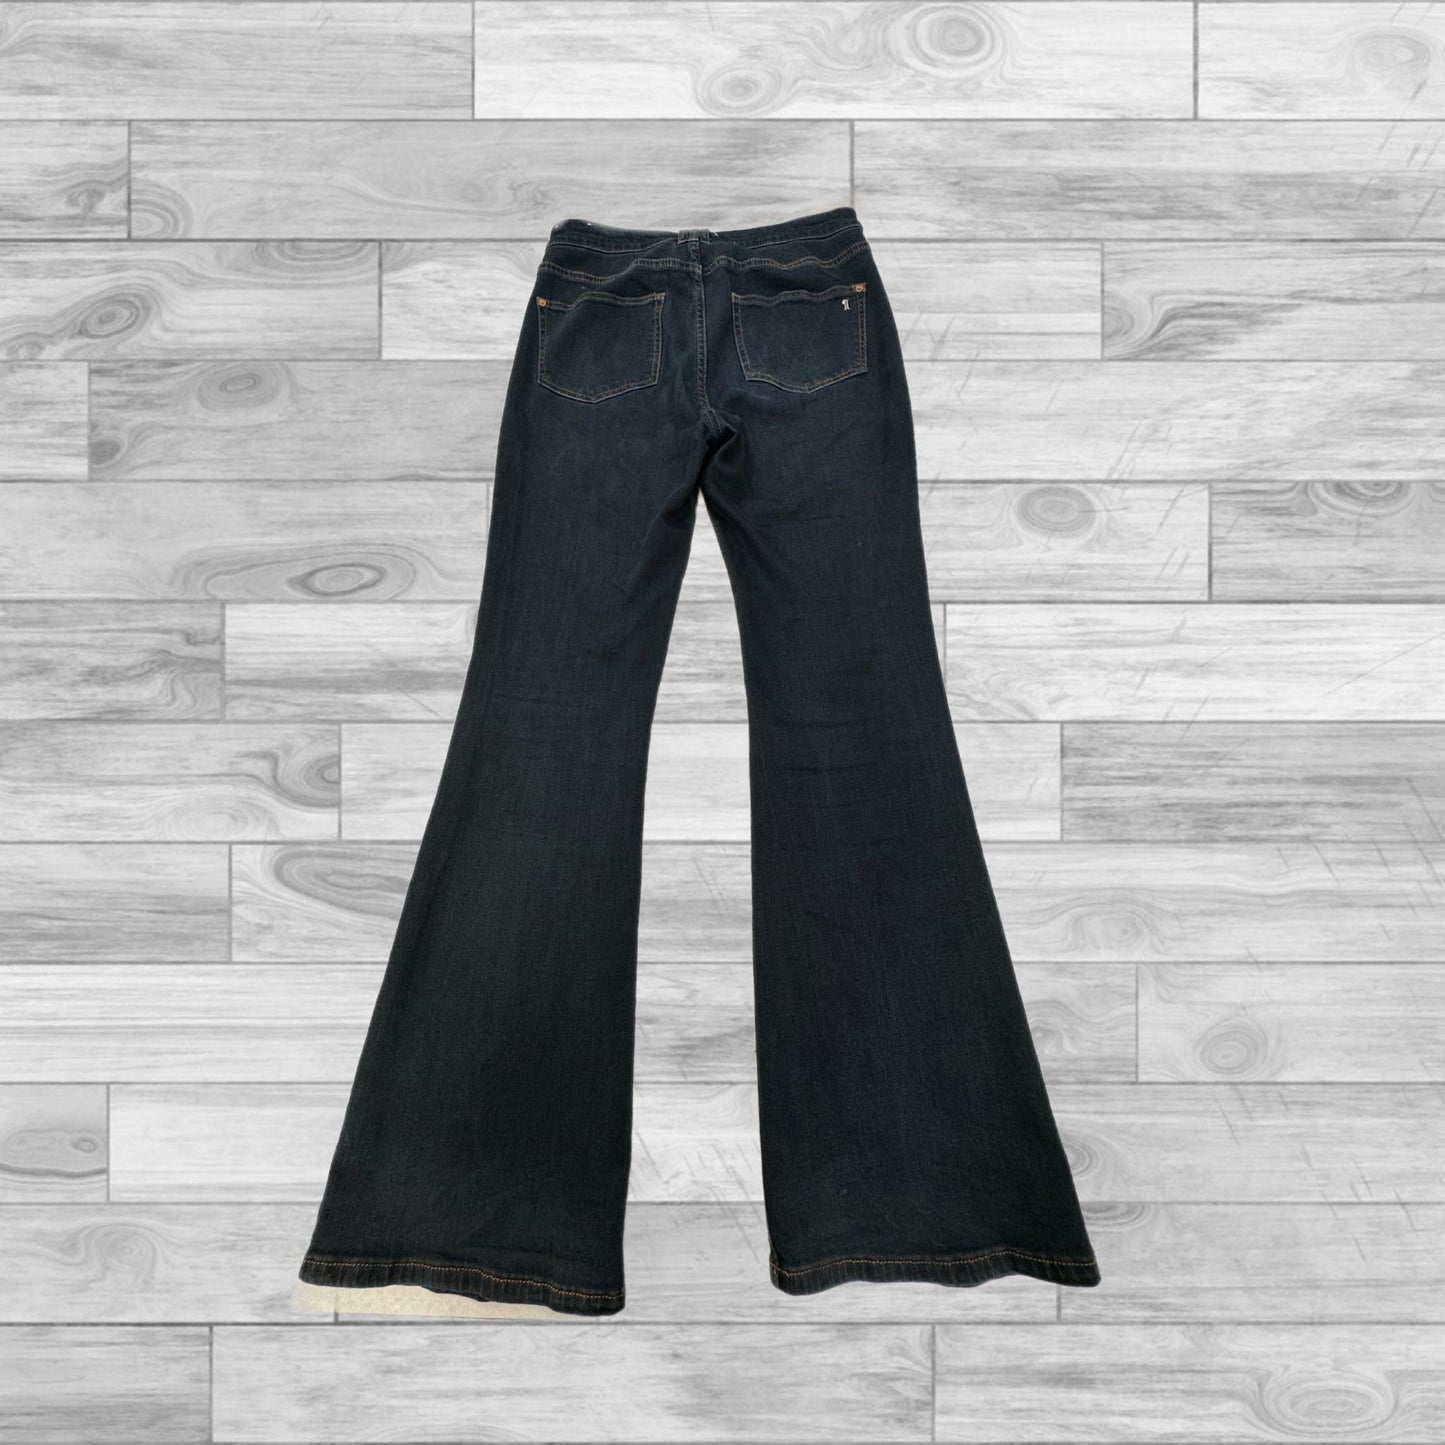 Denim Jeans Flared Pilcro, Size 8